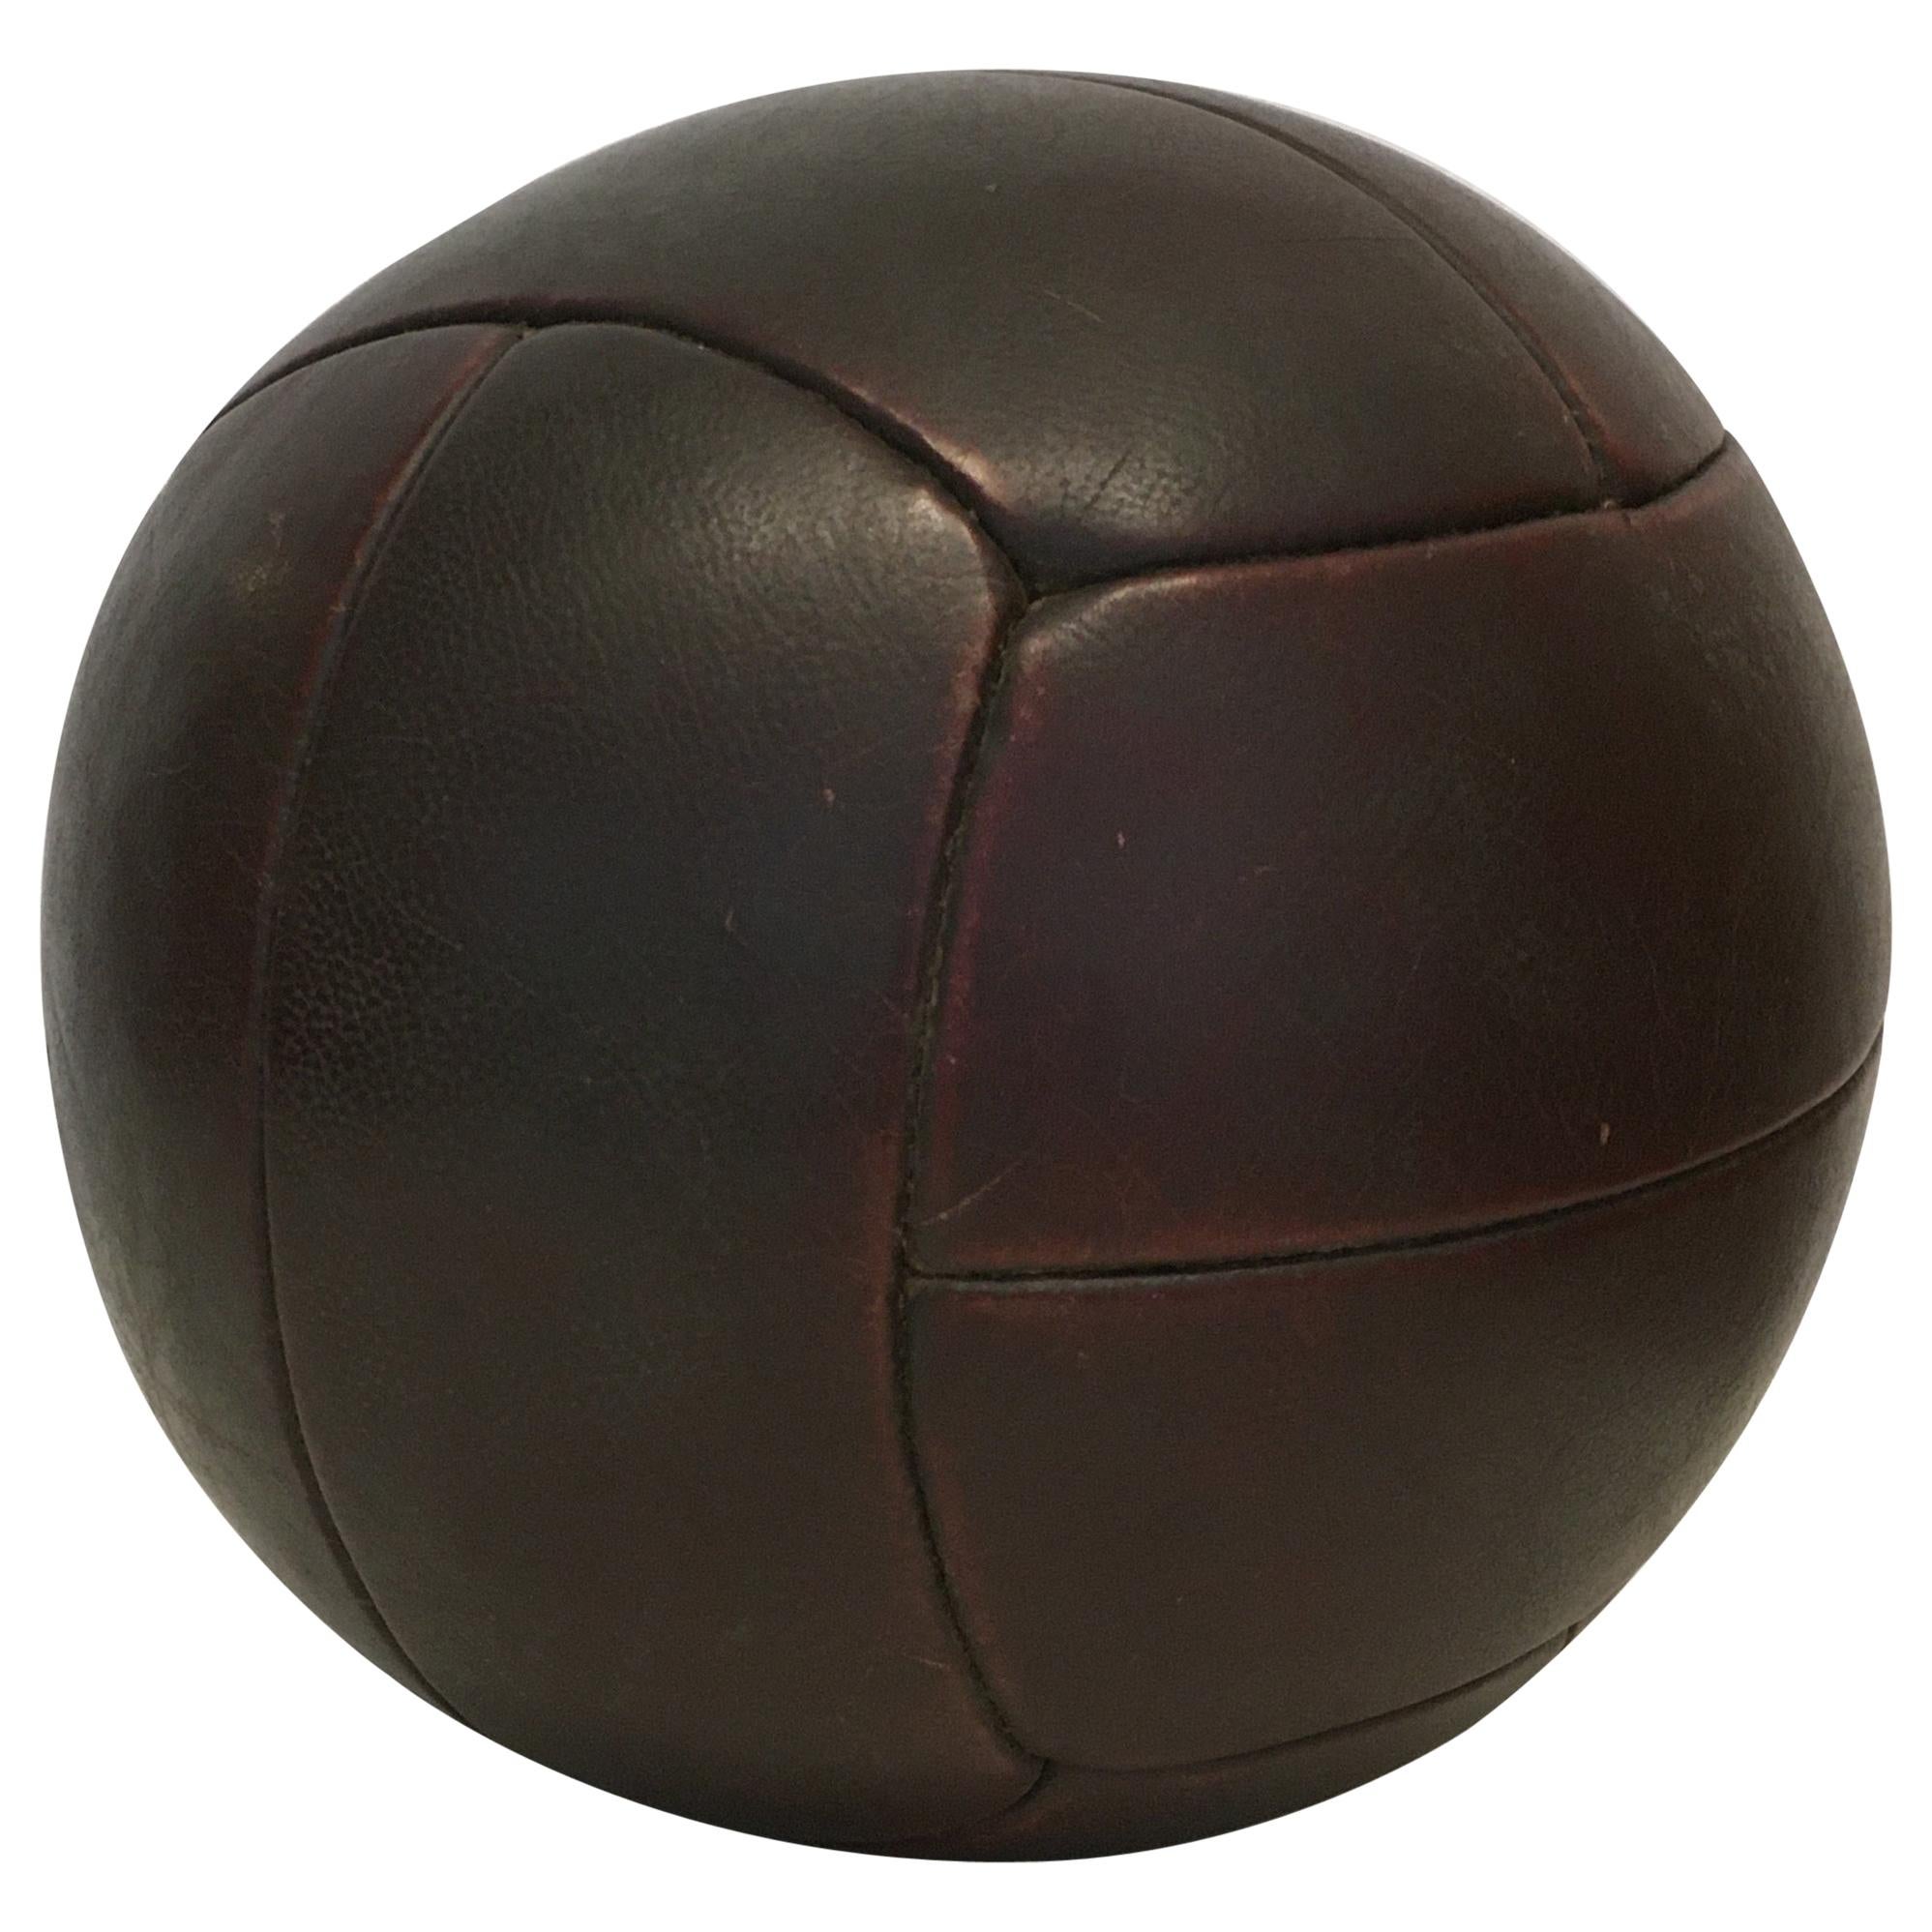 Vintage Mahogany Leather Medicine Ball, 3kg, 1930s